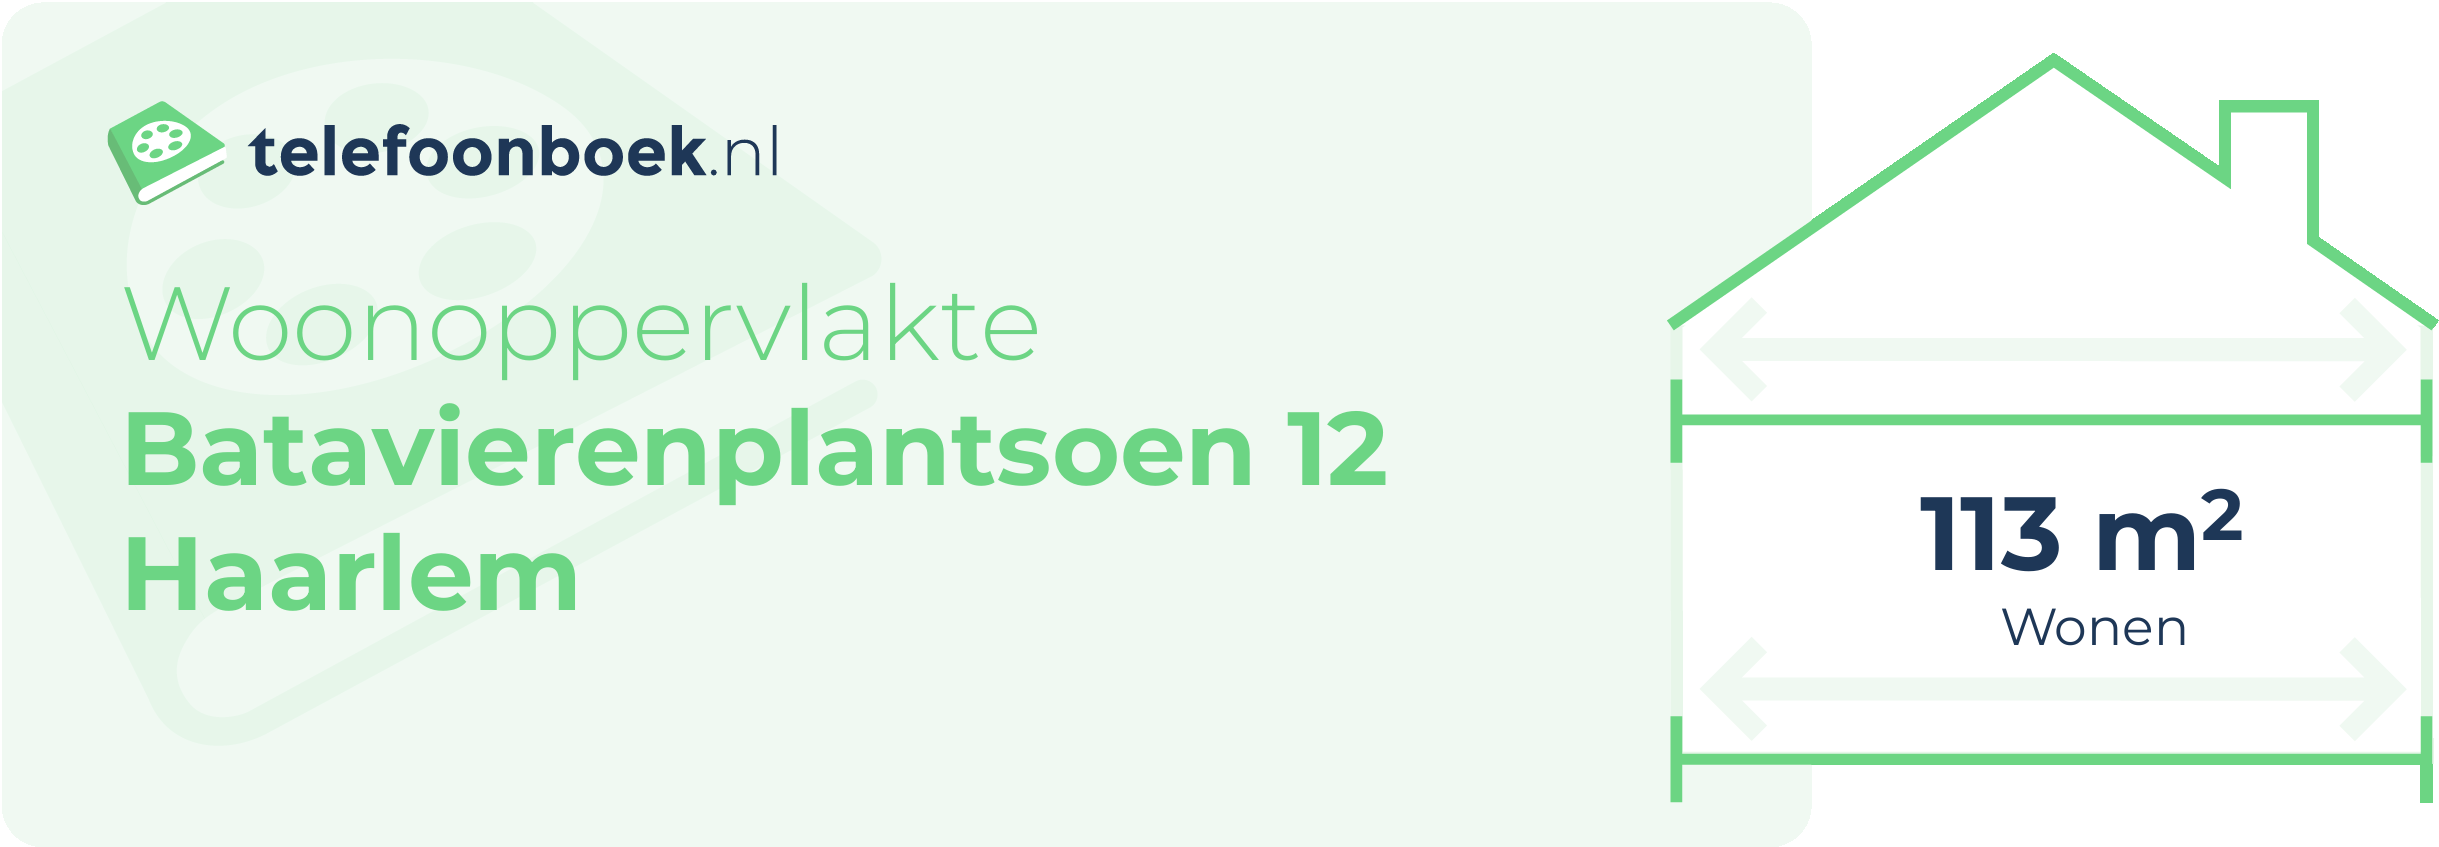 Woonoppervlakte Batavierenplantsoen 12 Haarlem